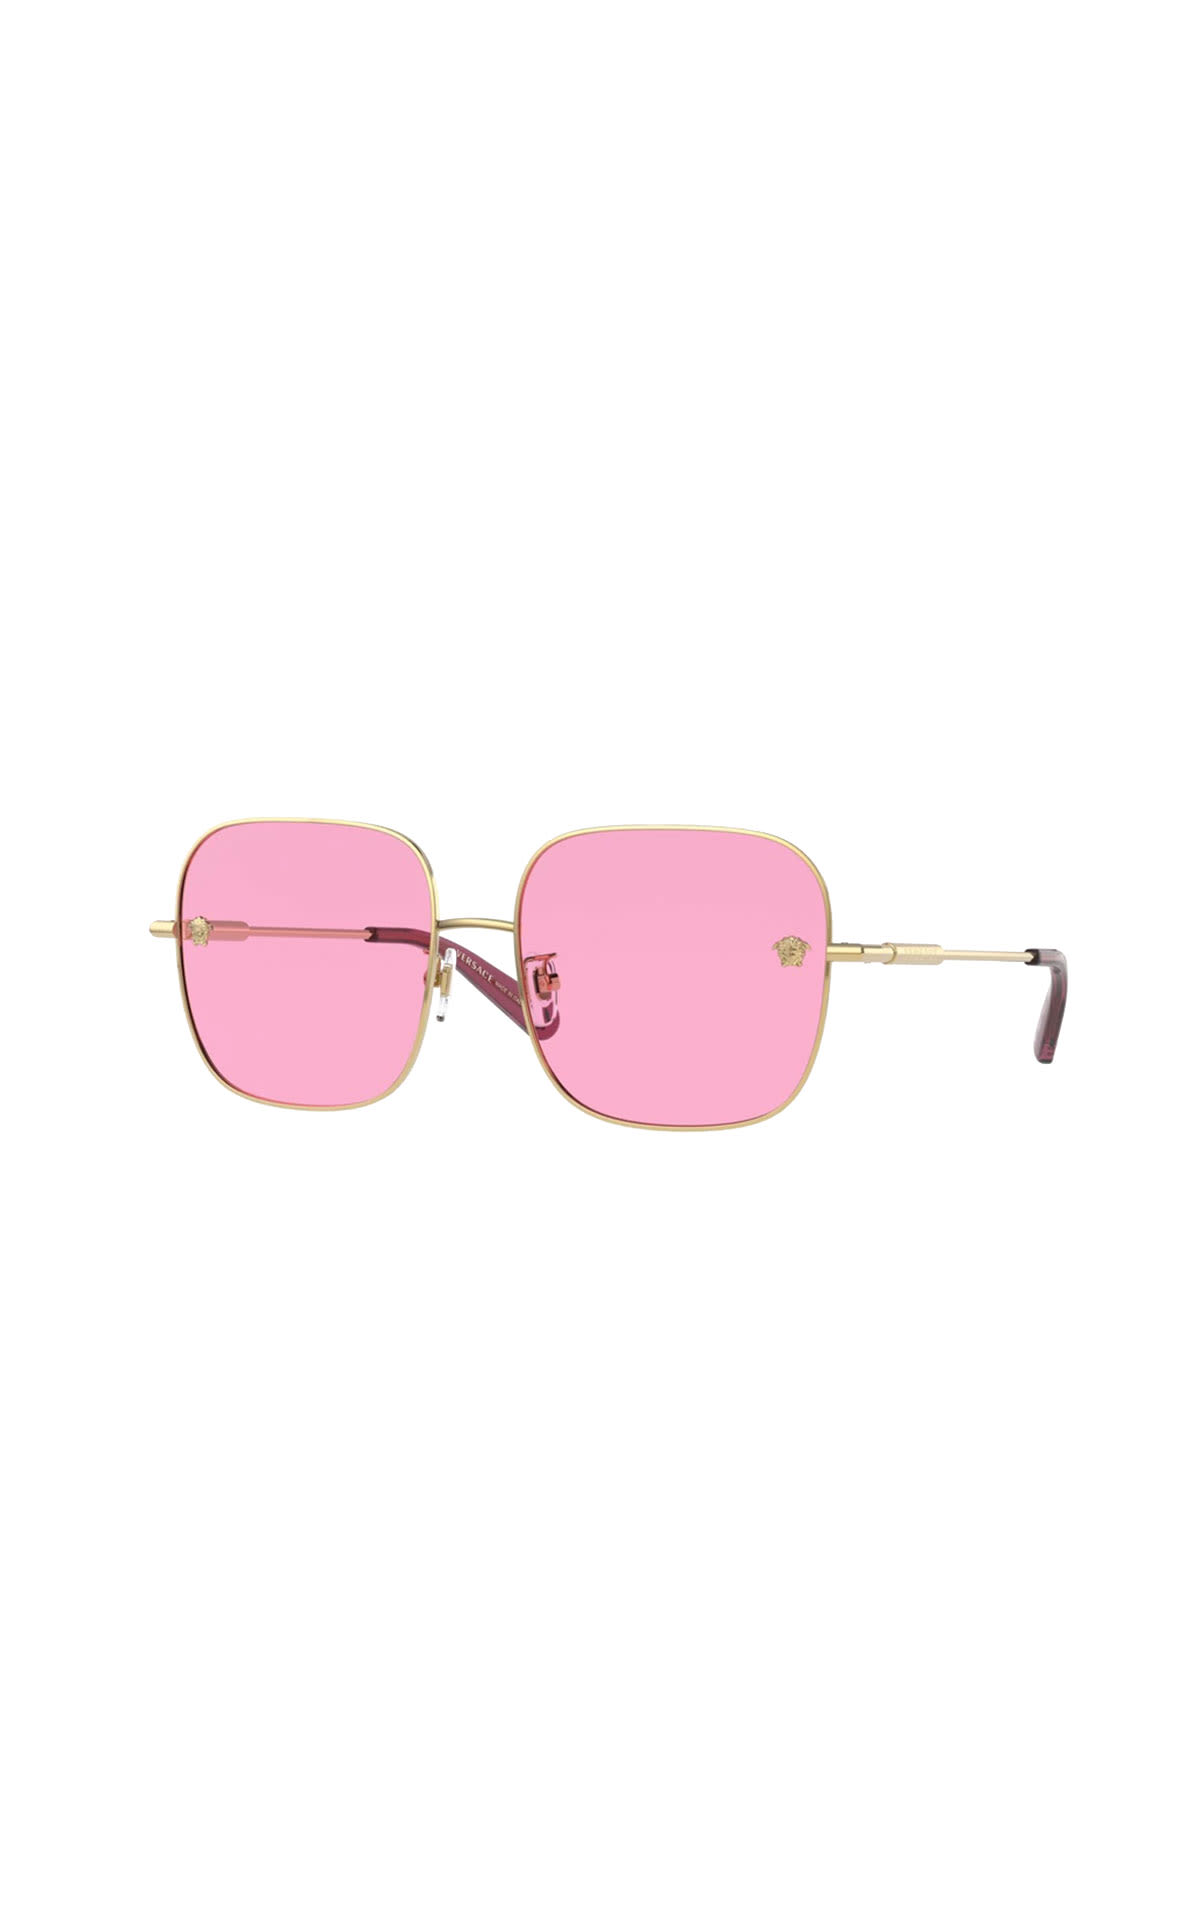 pink sunglasses SUnglass Hut